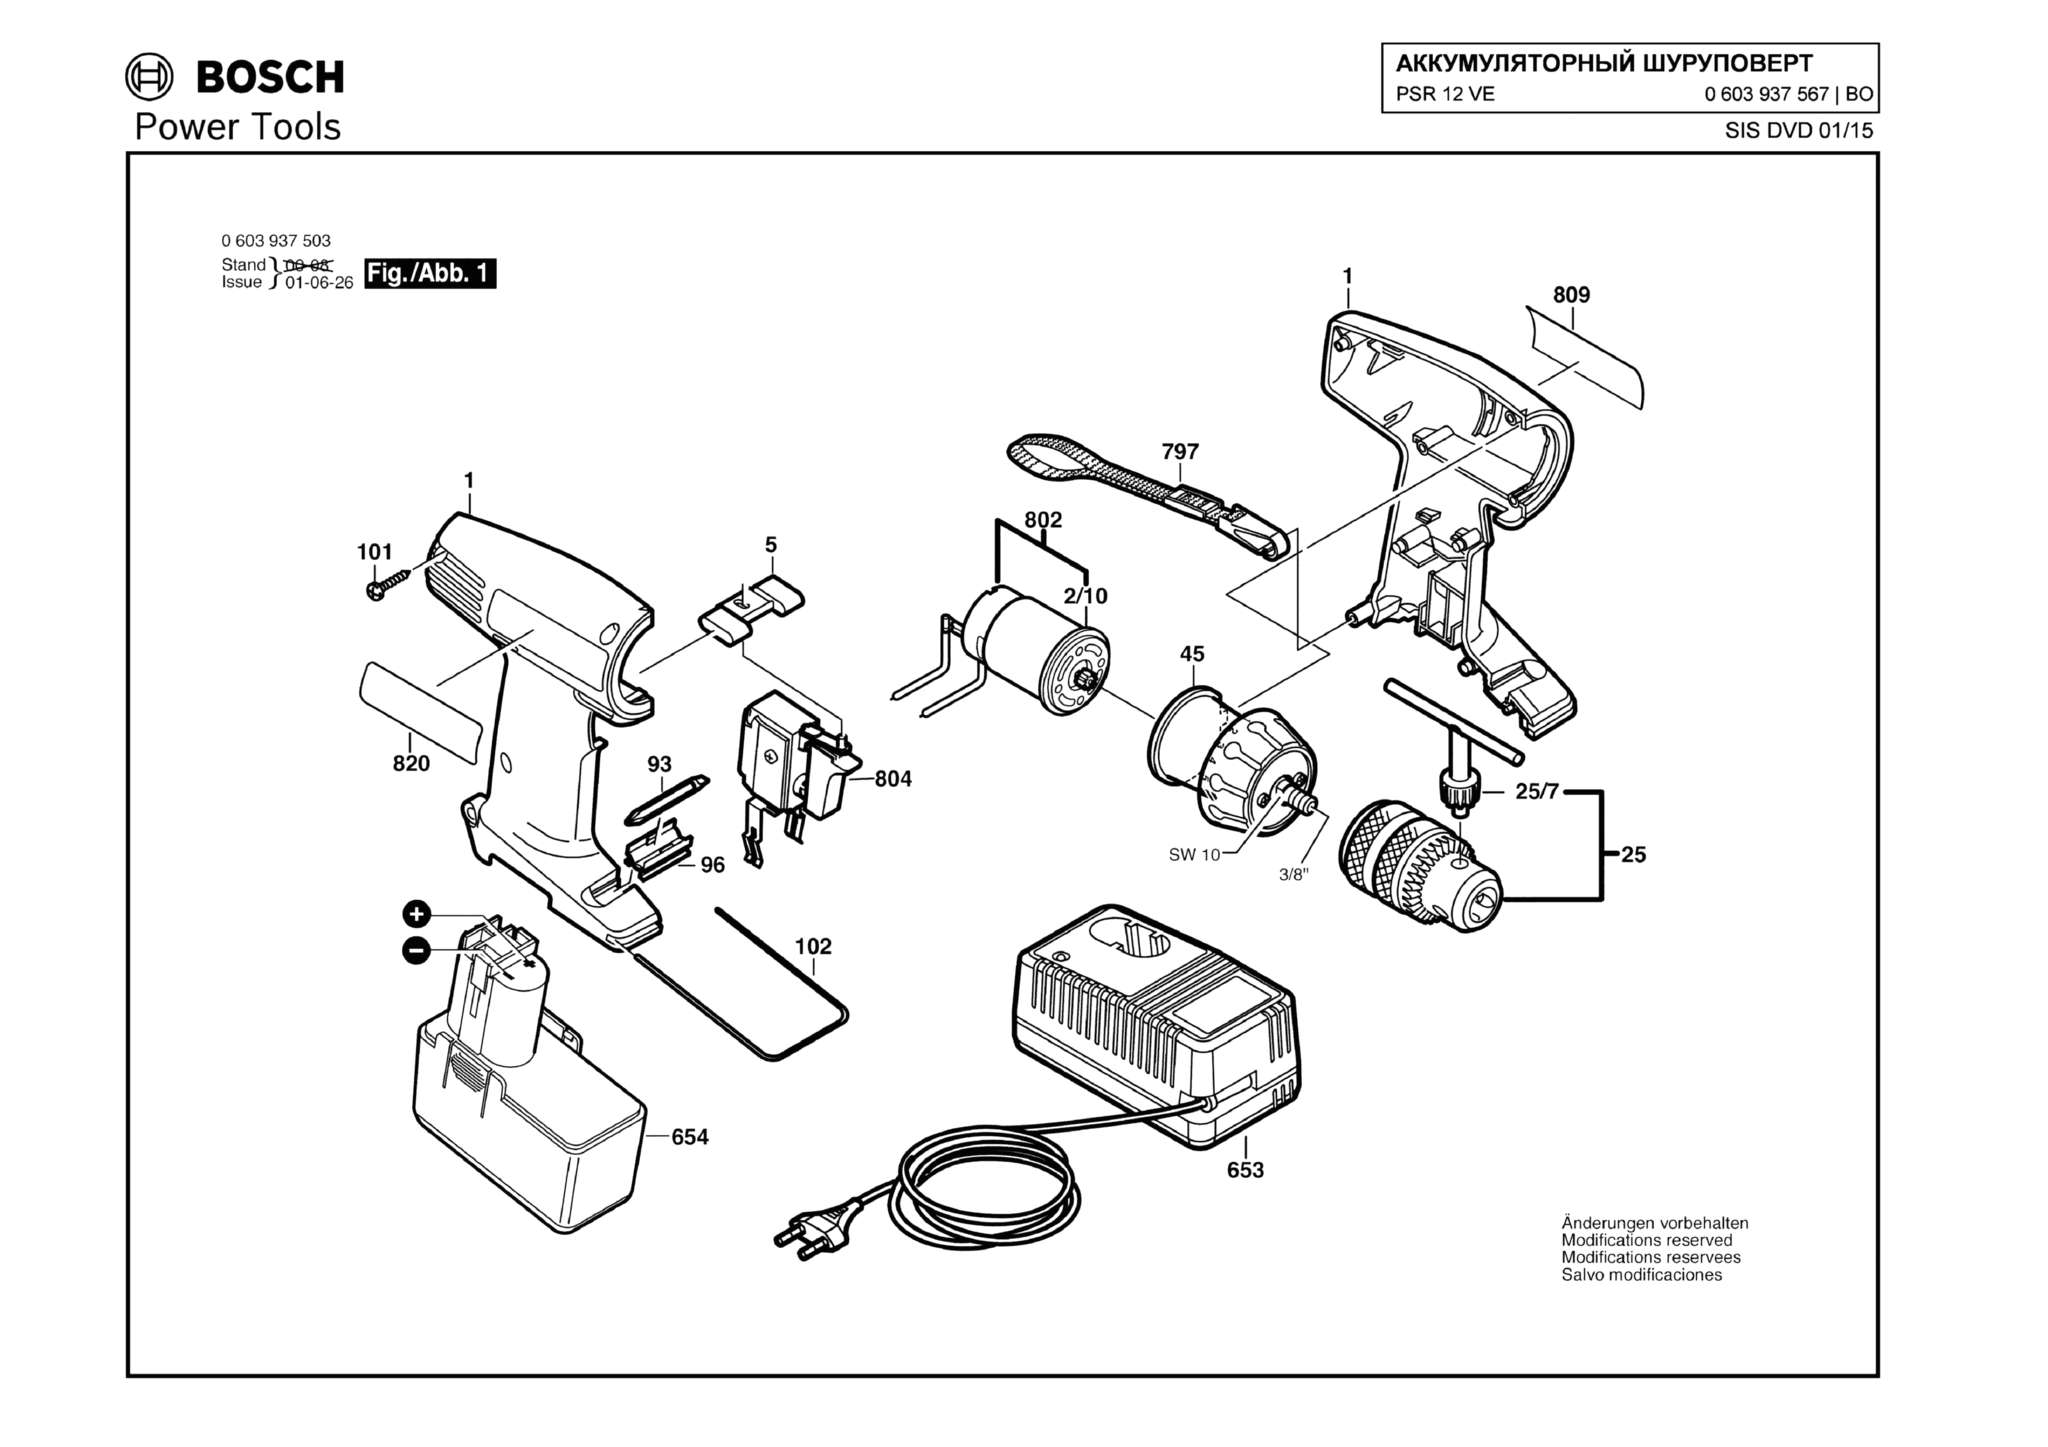 Запчасти, схема и деталировка Bosch PSR 12 VE (ТИП 0603937567)